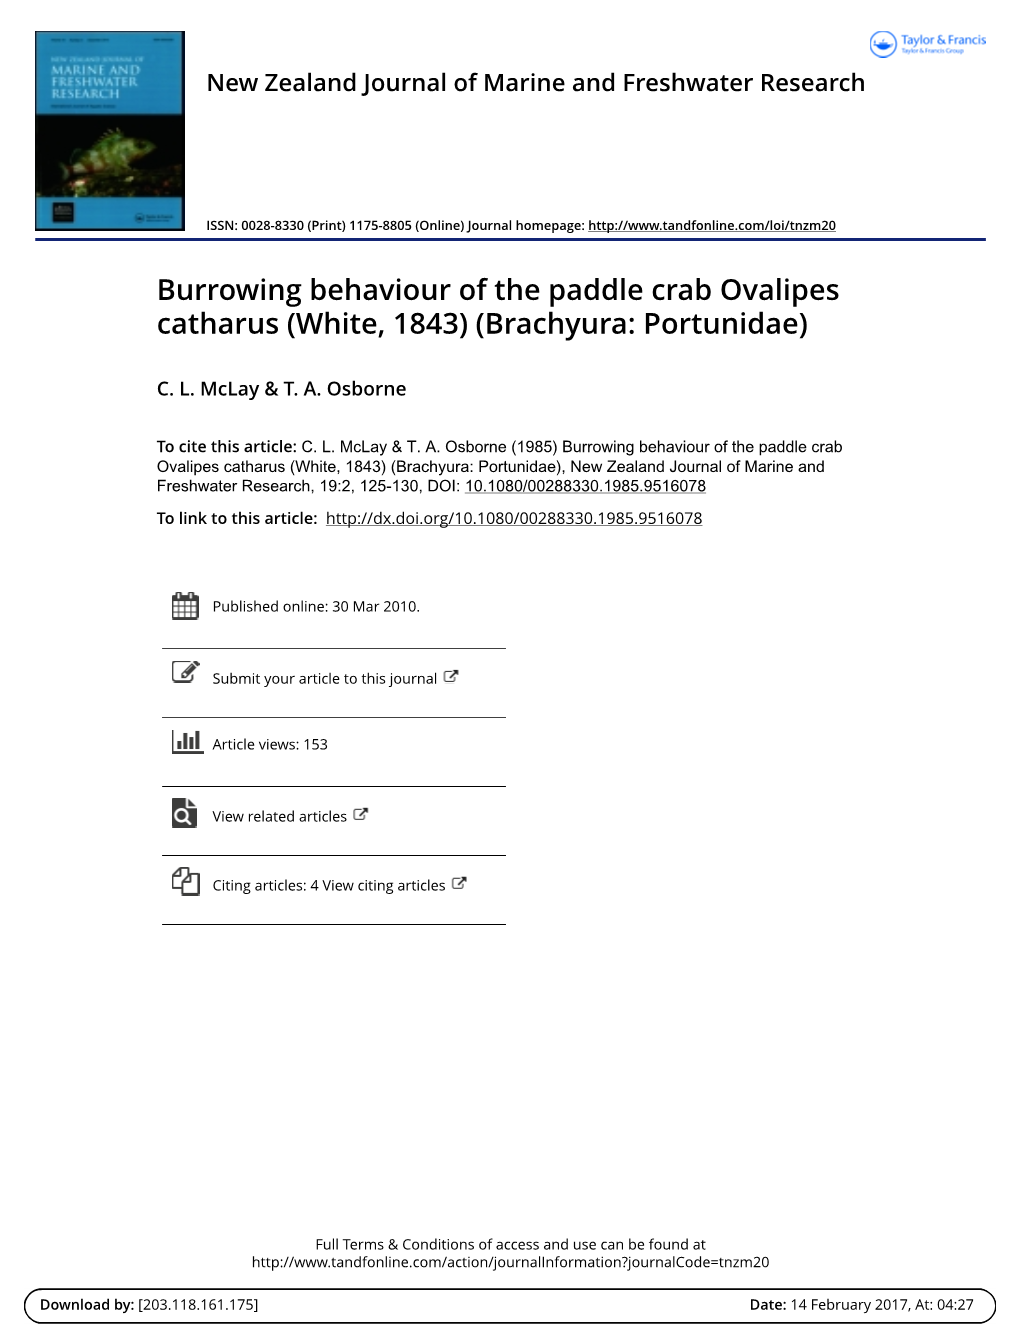 Burrowing Behaviour of the Paddle Crab Ovalipes Catharus (White, 1843) (Brachyura: Portunidae)